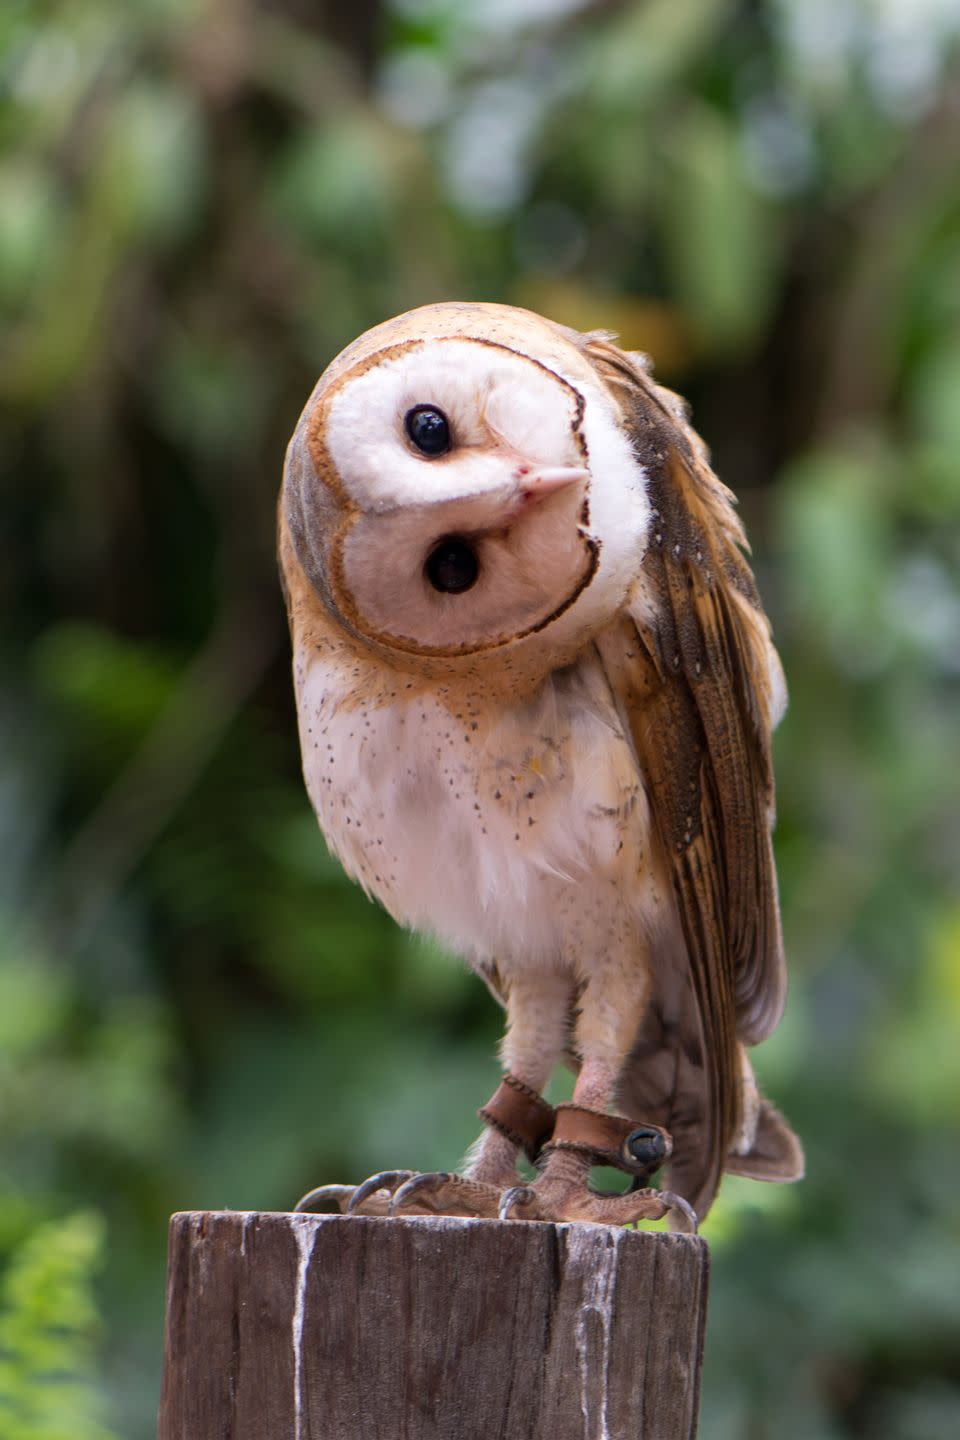 2) Owls can twist their heads 270 degrees